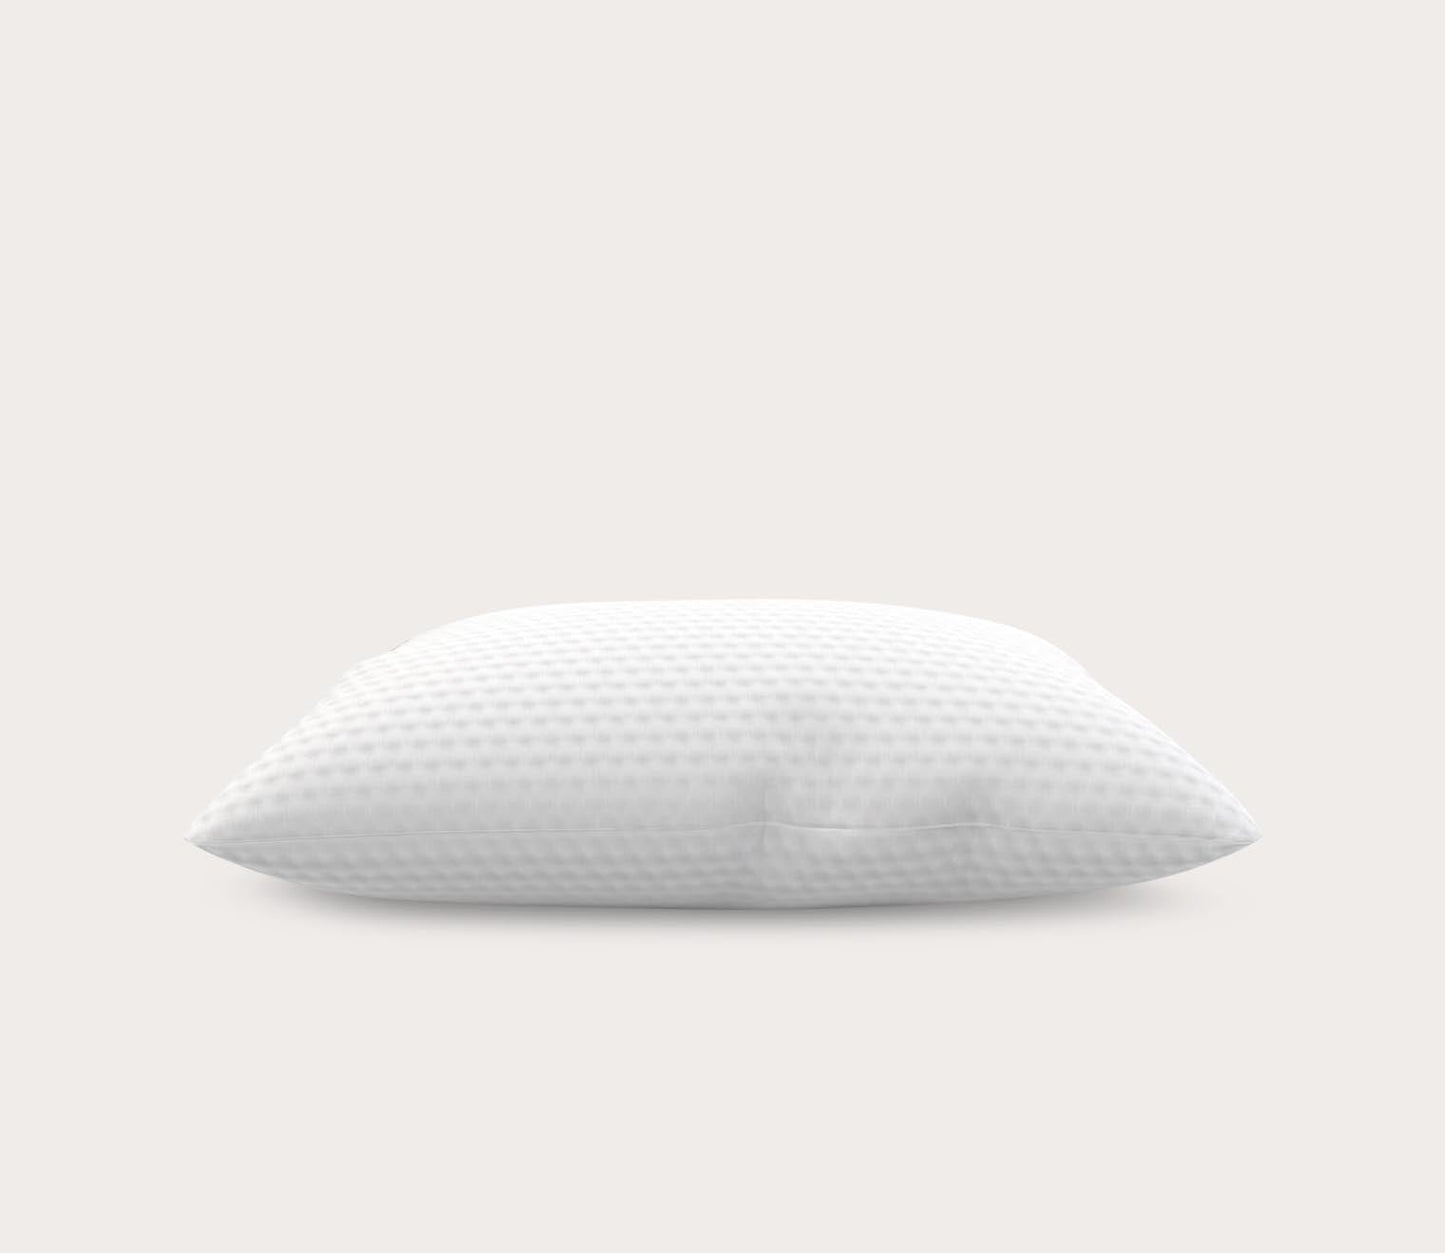 Shredded Memory Foam Pillow 2-Pack by GhostBed